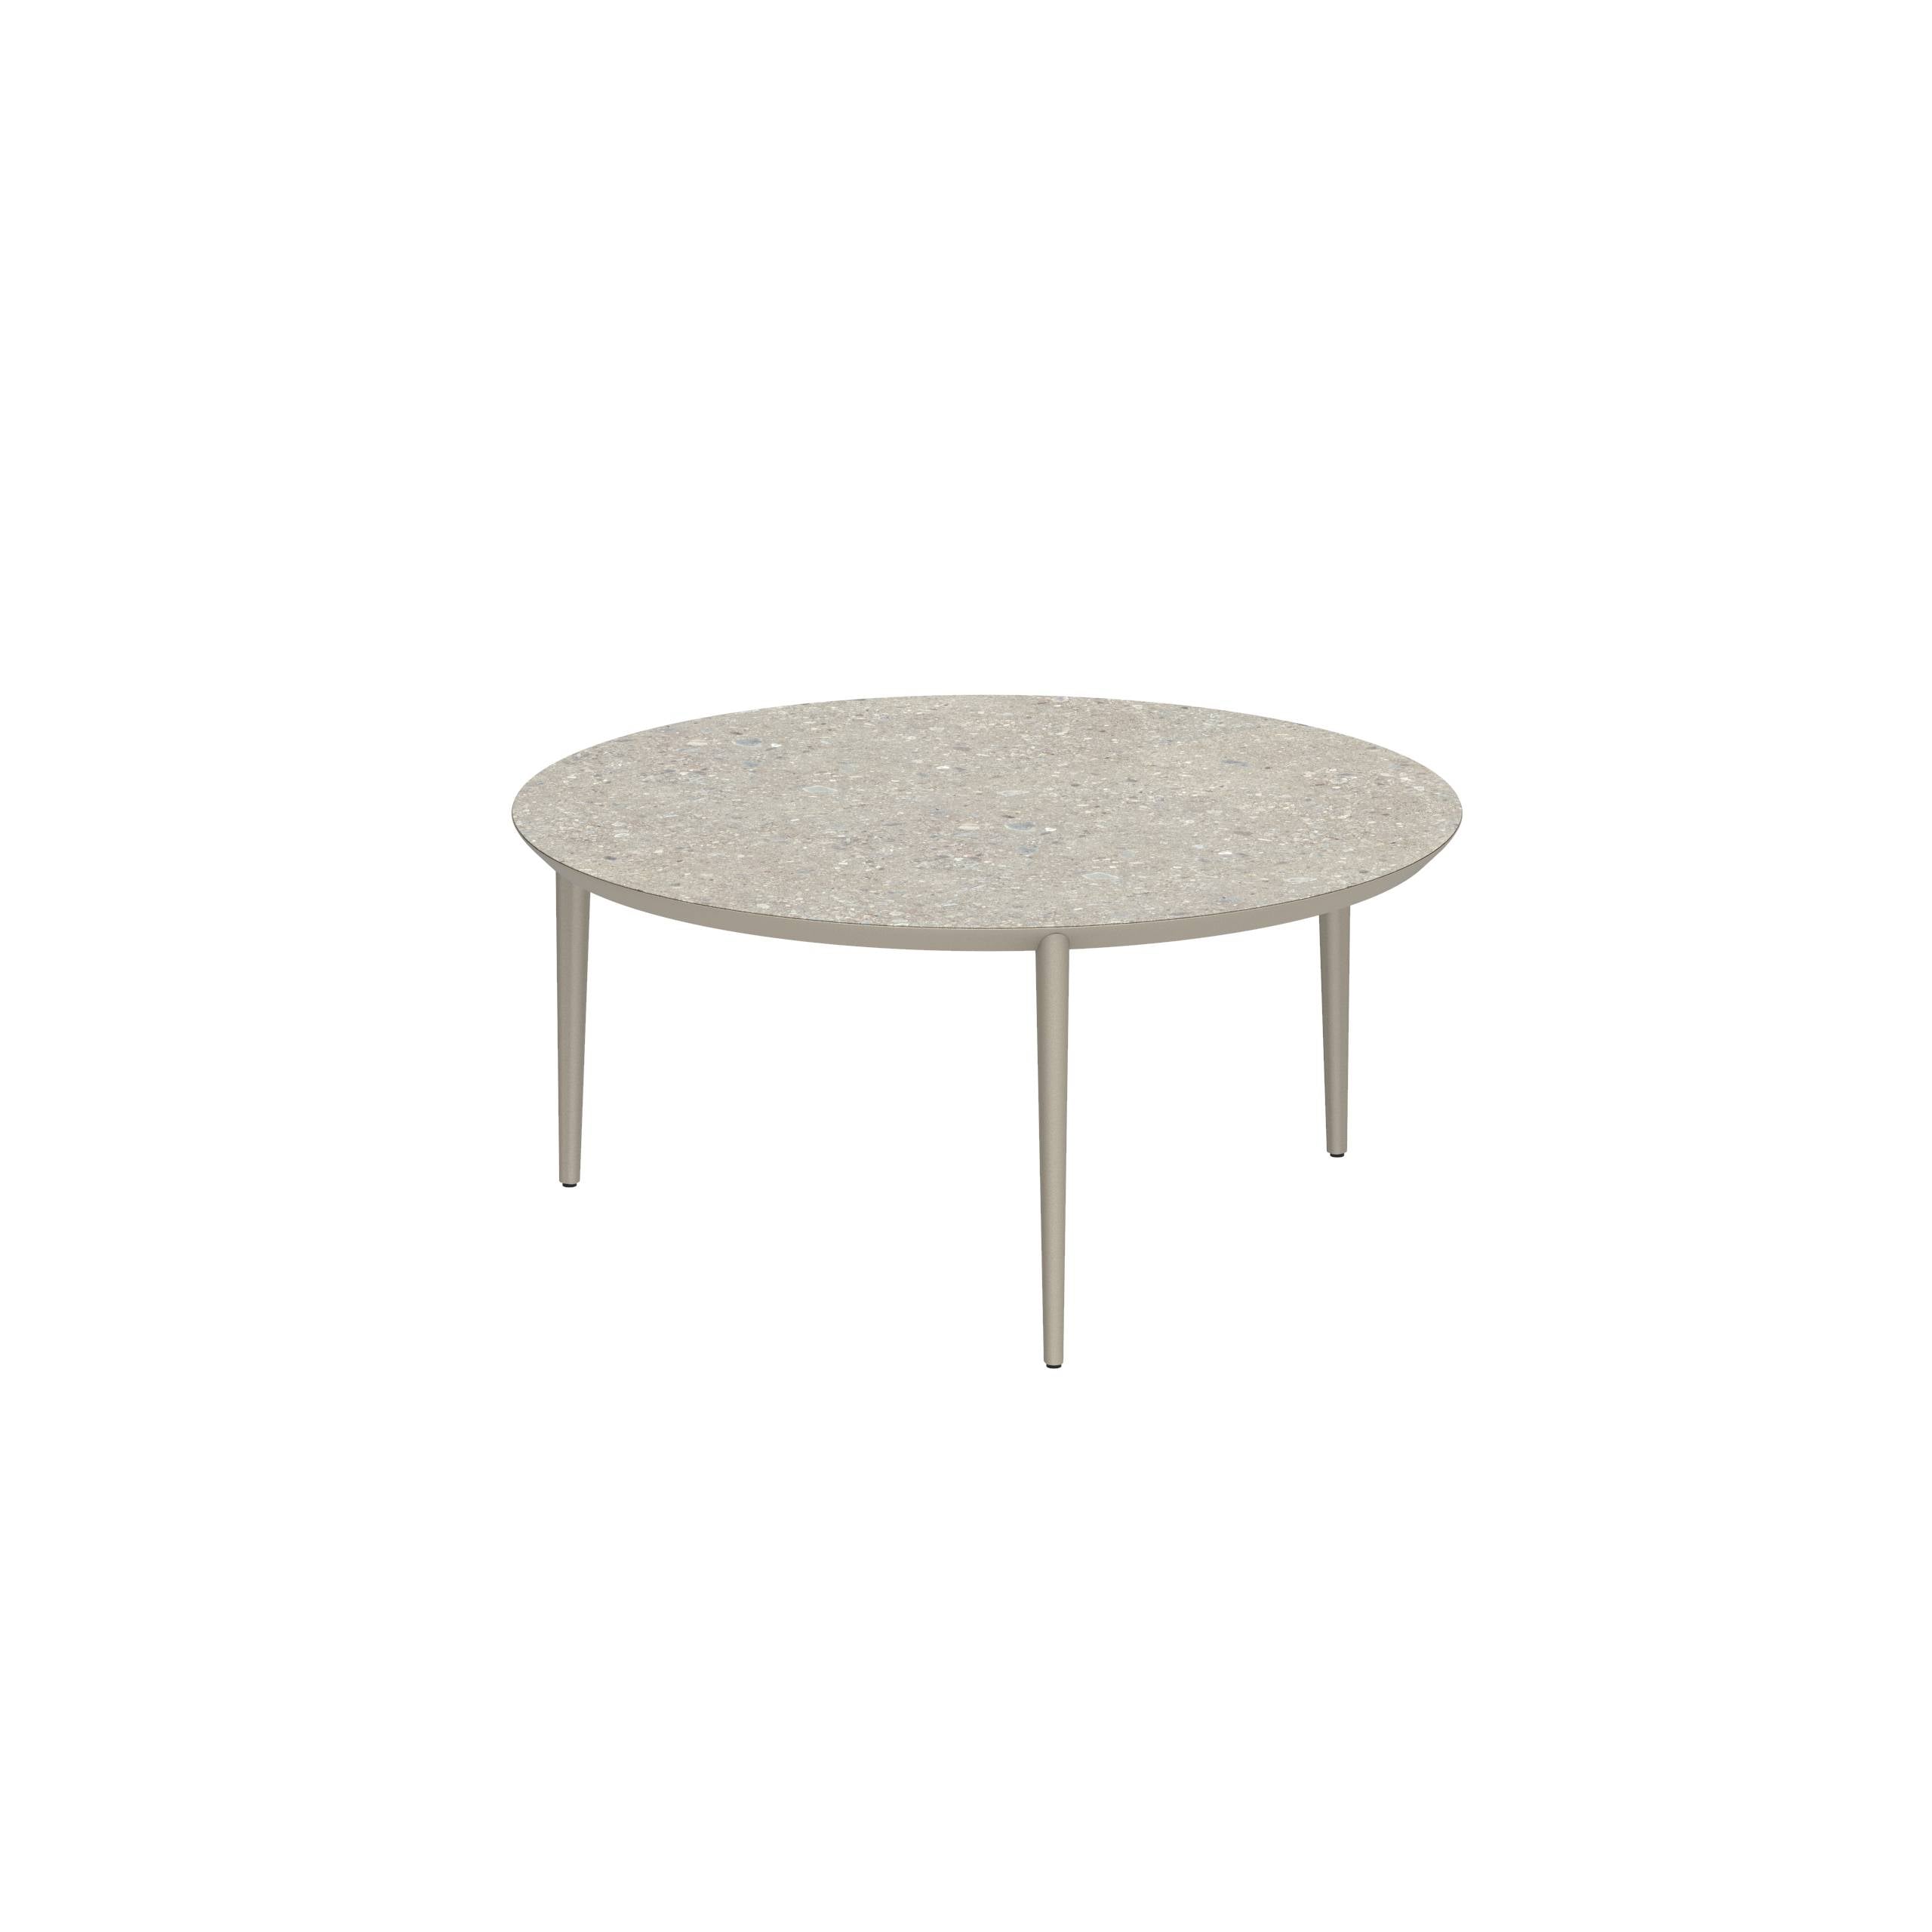 U-Nite Table Round Ø 160cm Alu Legs Sand - Table Top Ceramic Ceppo Dolomitica